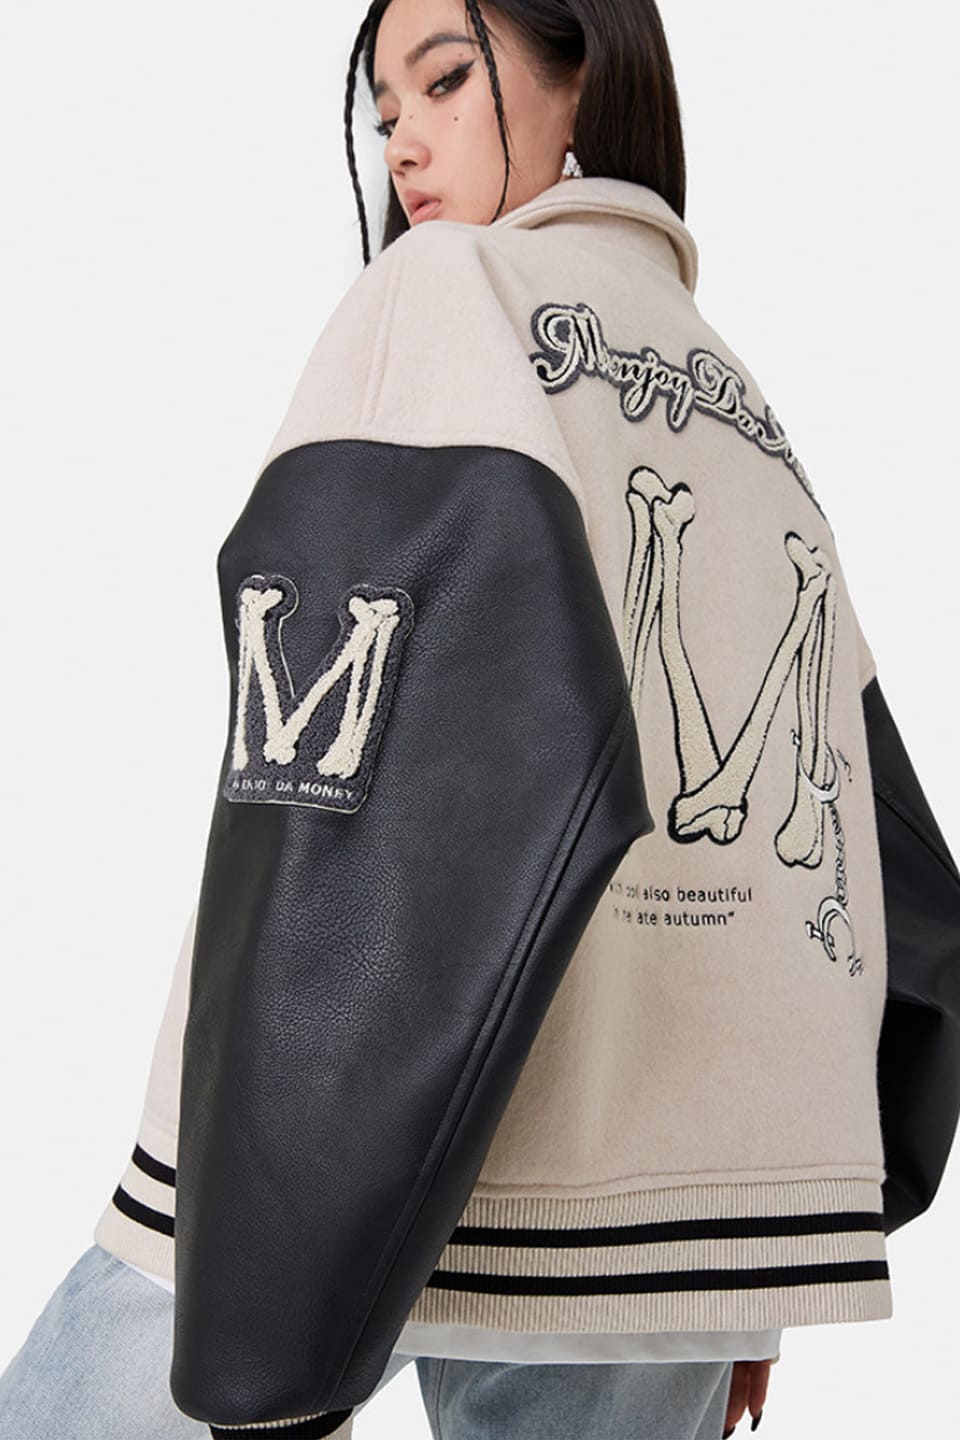 【MEDM 公式】Bone Baseball Jacket ジャケット